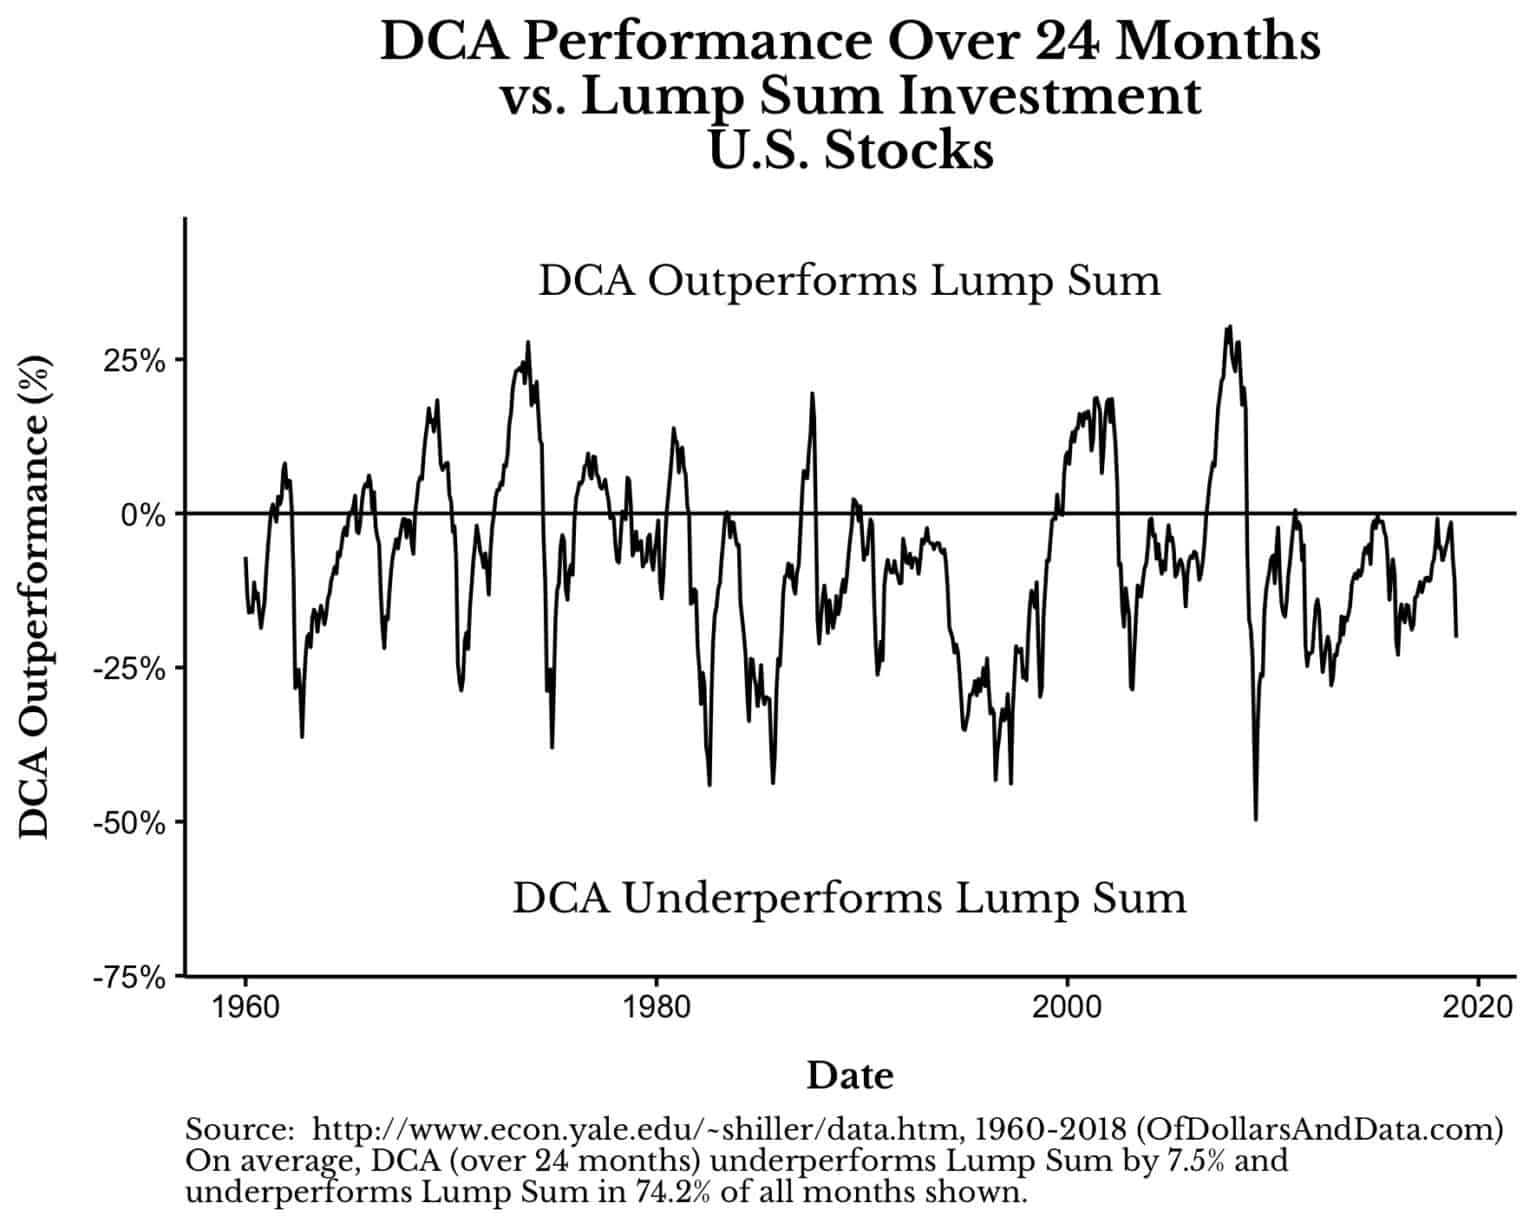 ls v dca2 outperformance 24m U.S. Stocks 1536x1229 1